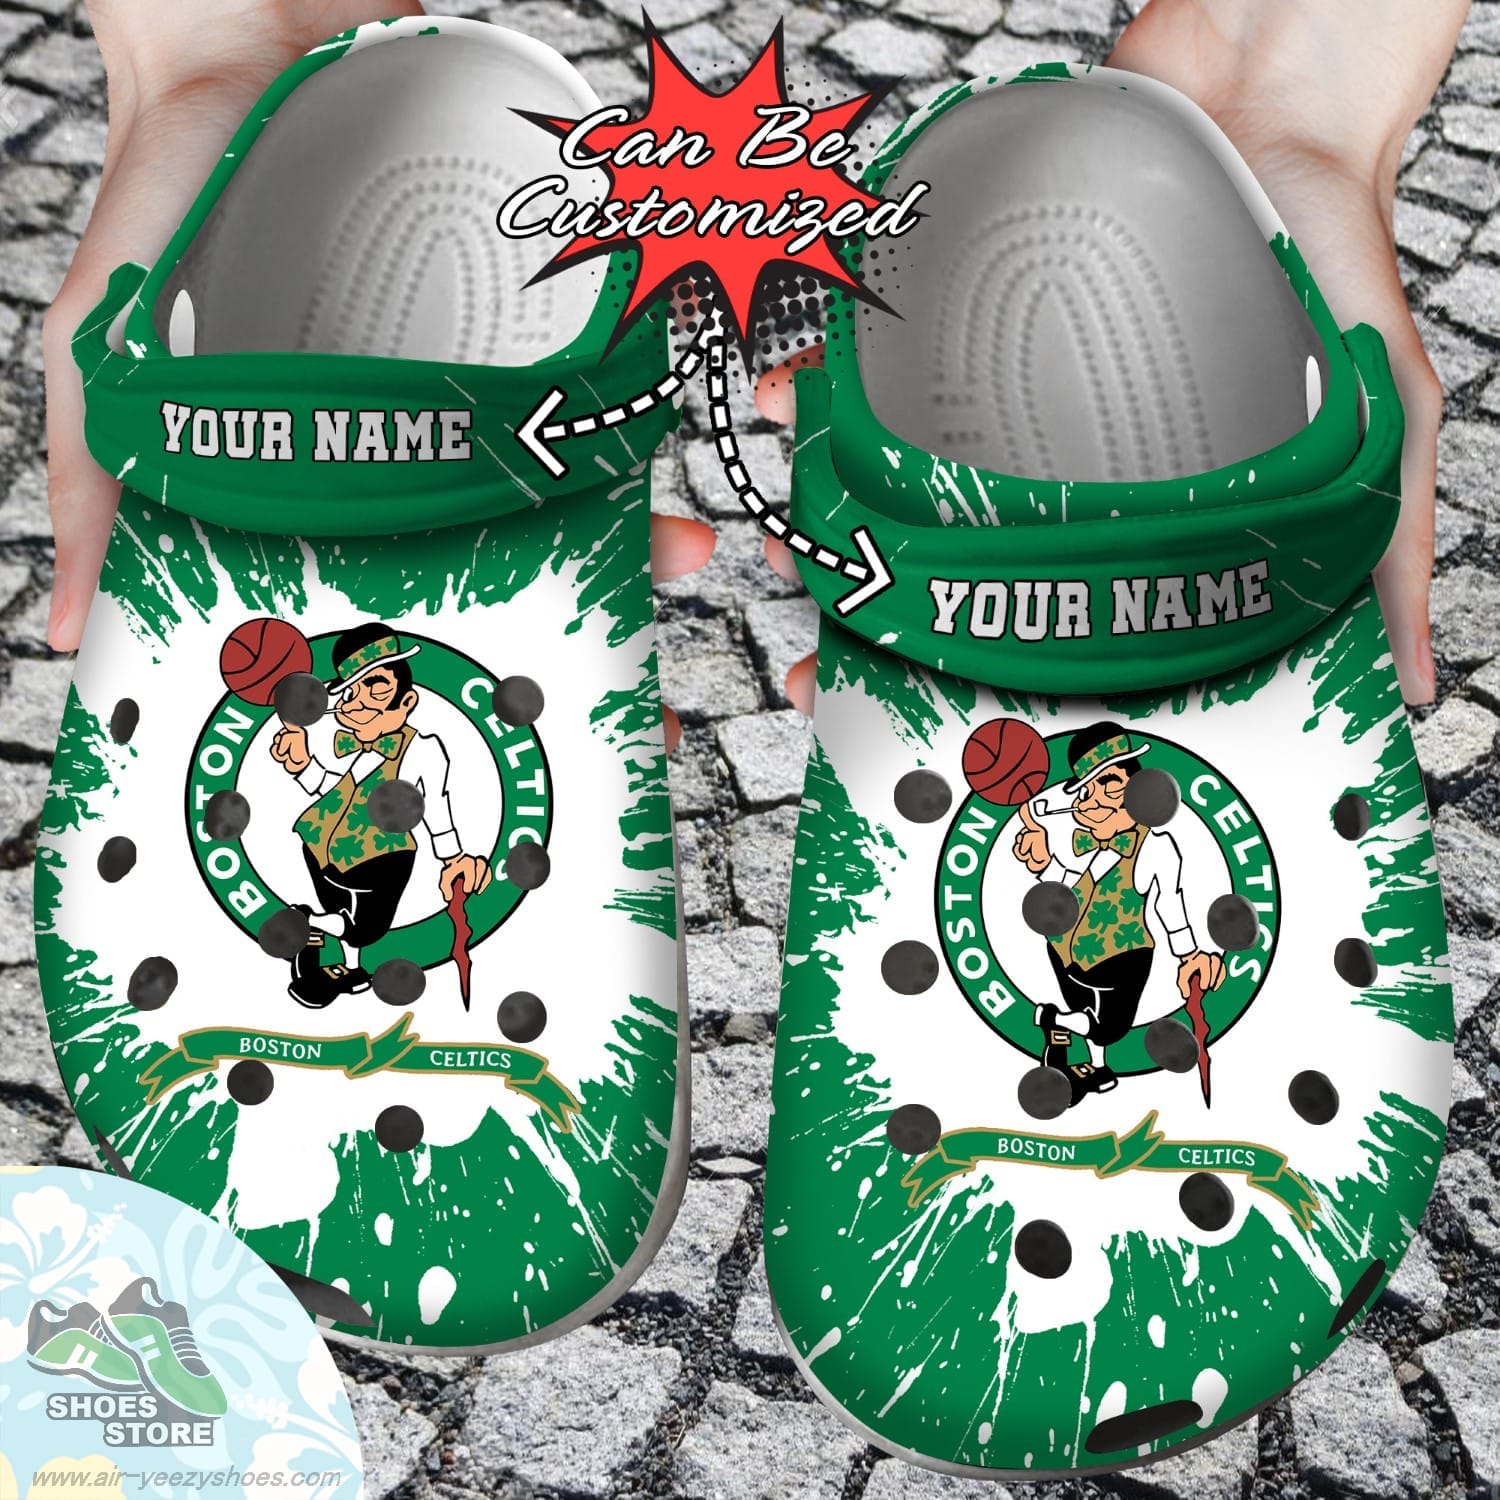 Personalized Boston Celtics Team Clog Shoes Basketball Crocs Shoes